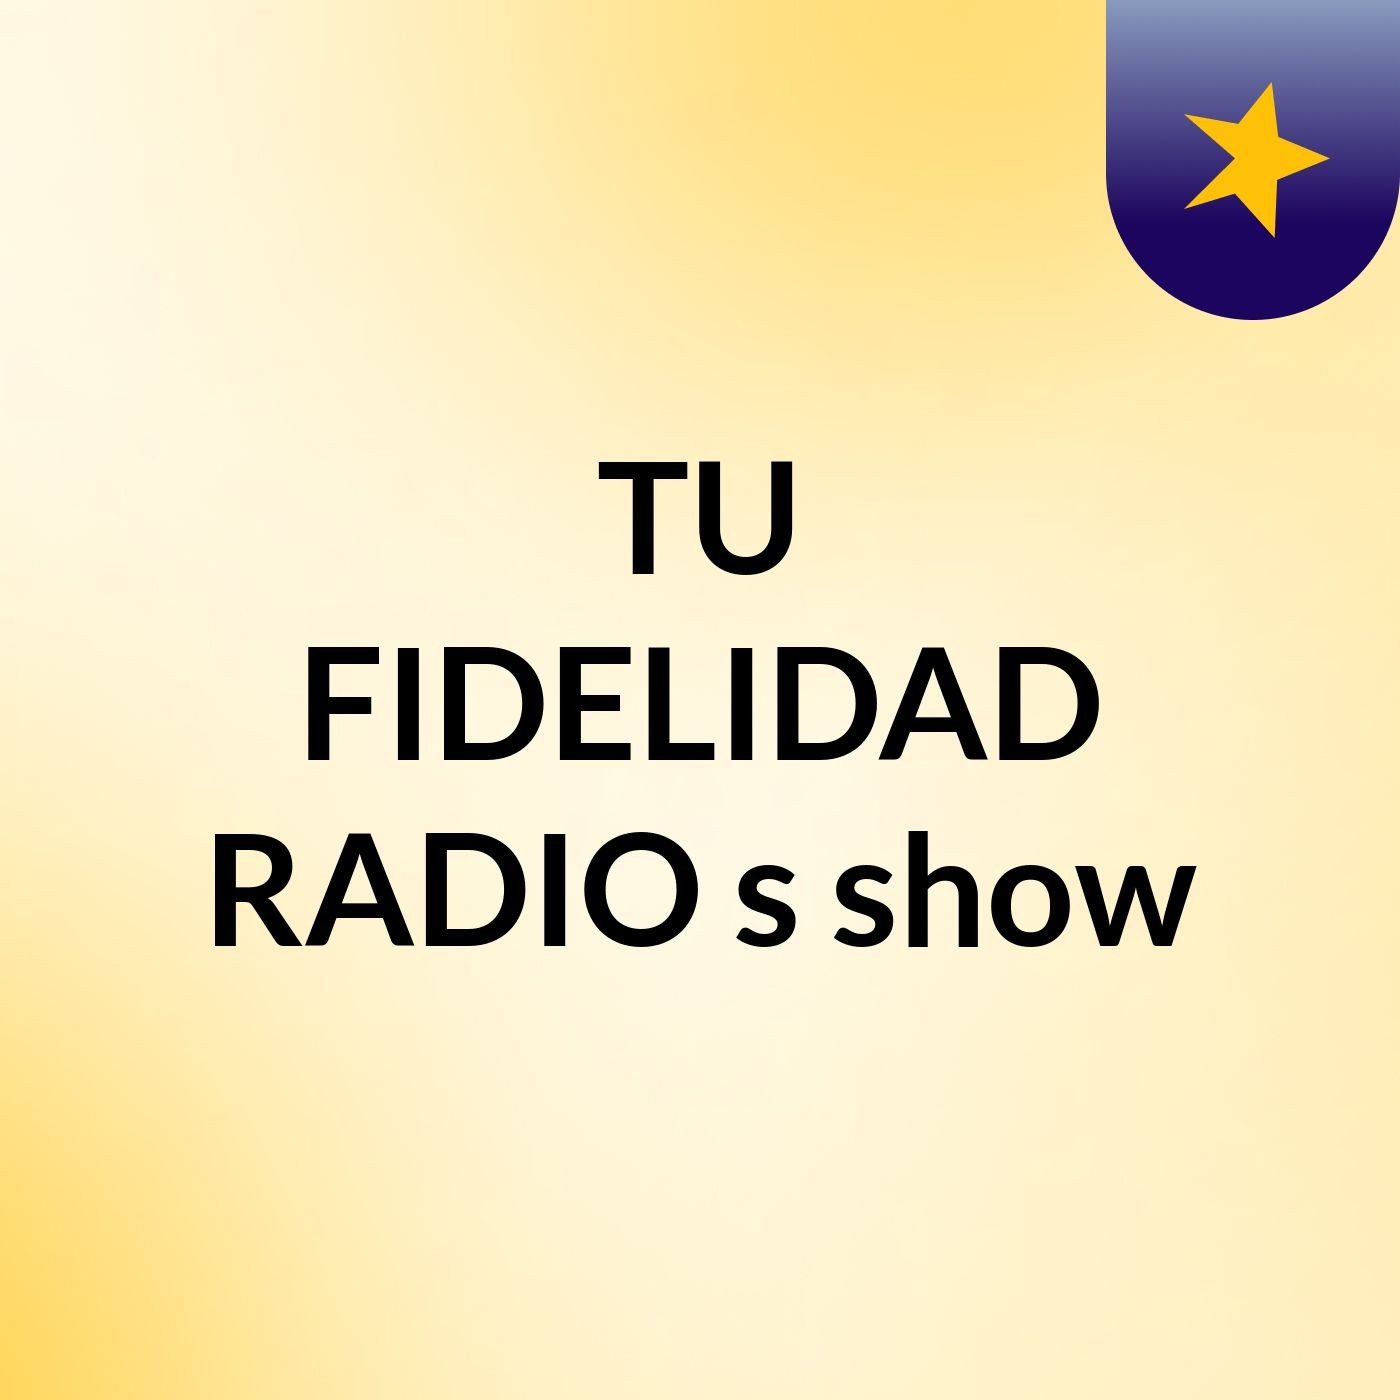 TU FIDELIDAD RADIO's show